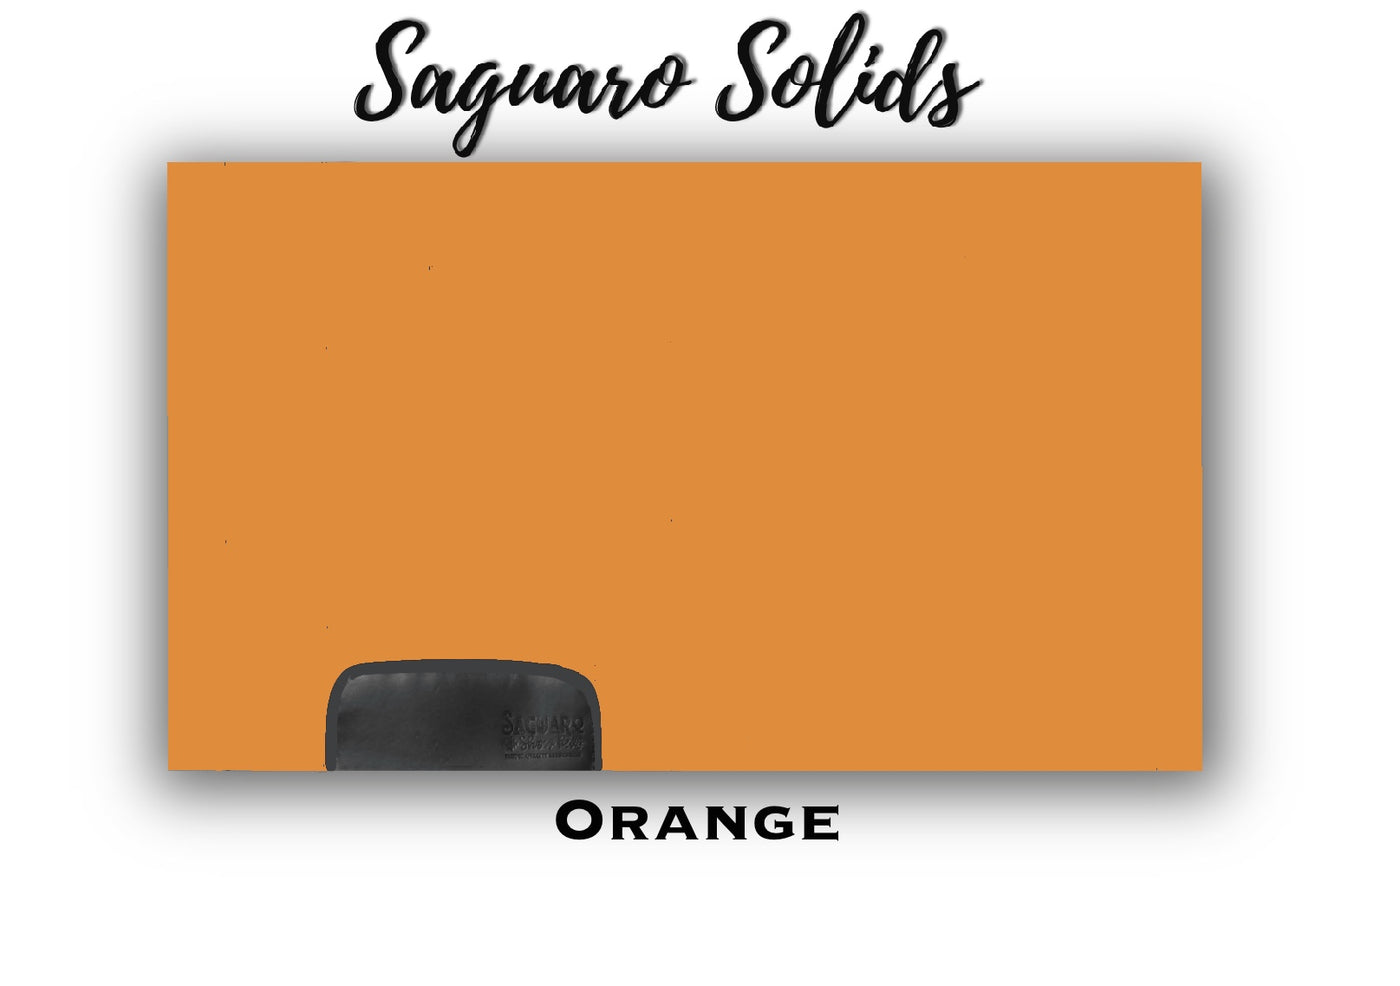 Saguaro Solid "Orange" Show Pad (SEMI-CUSTOM)